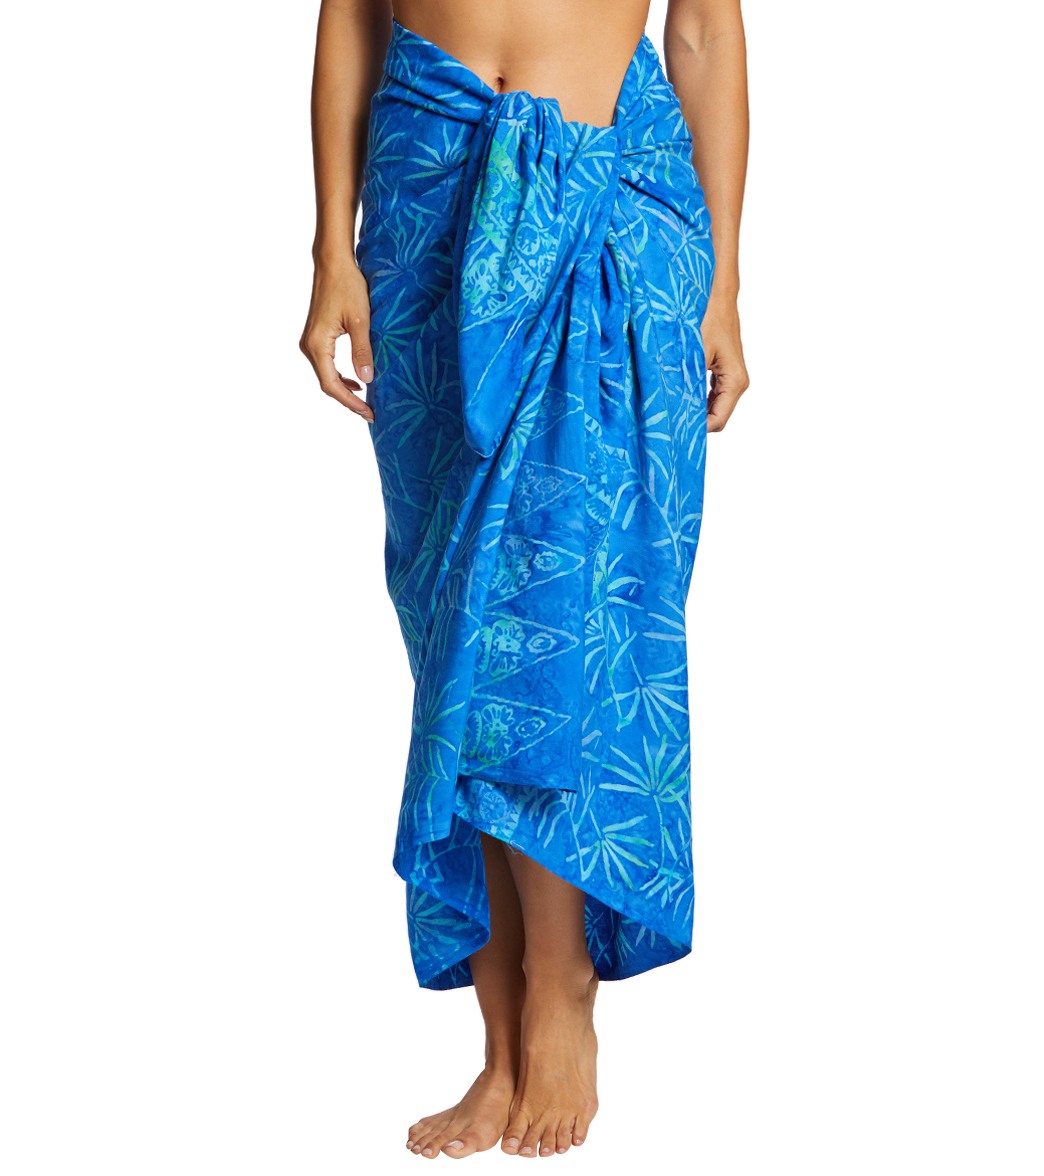 Batik Bali Blue Sarong at SwimOutlet.com